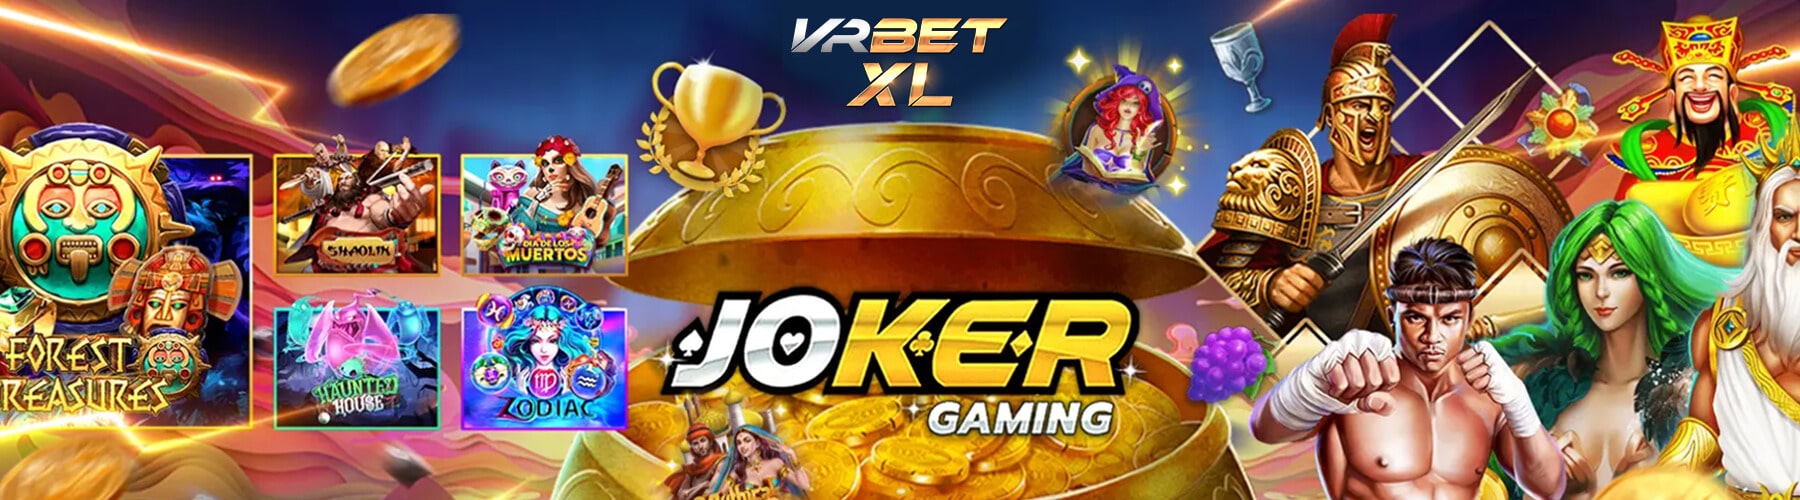 VRBETXL - Joker Gaming